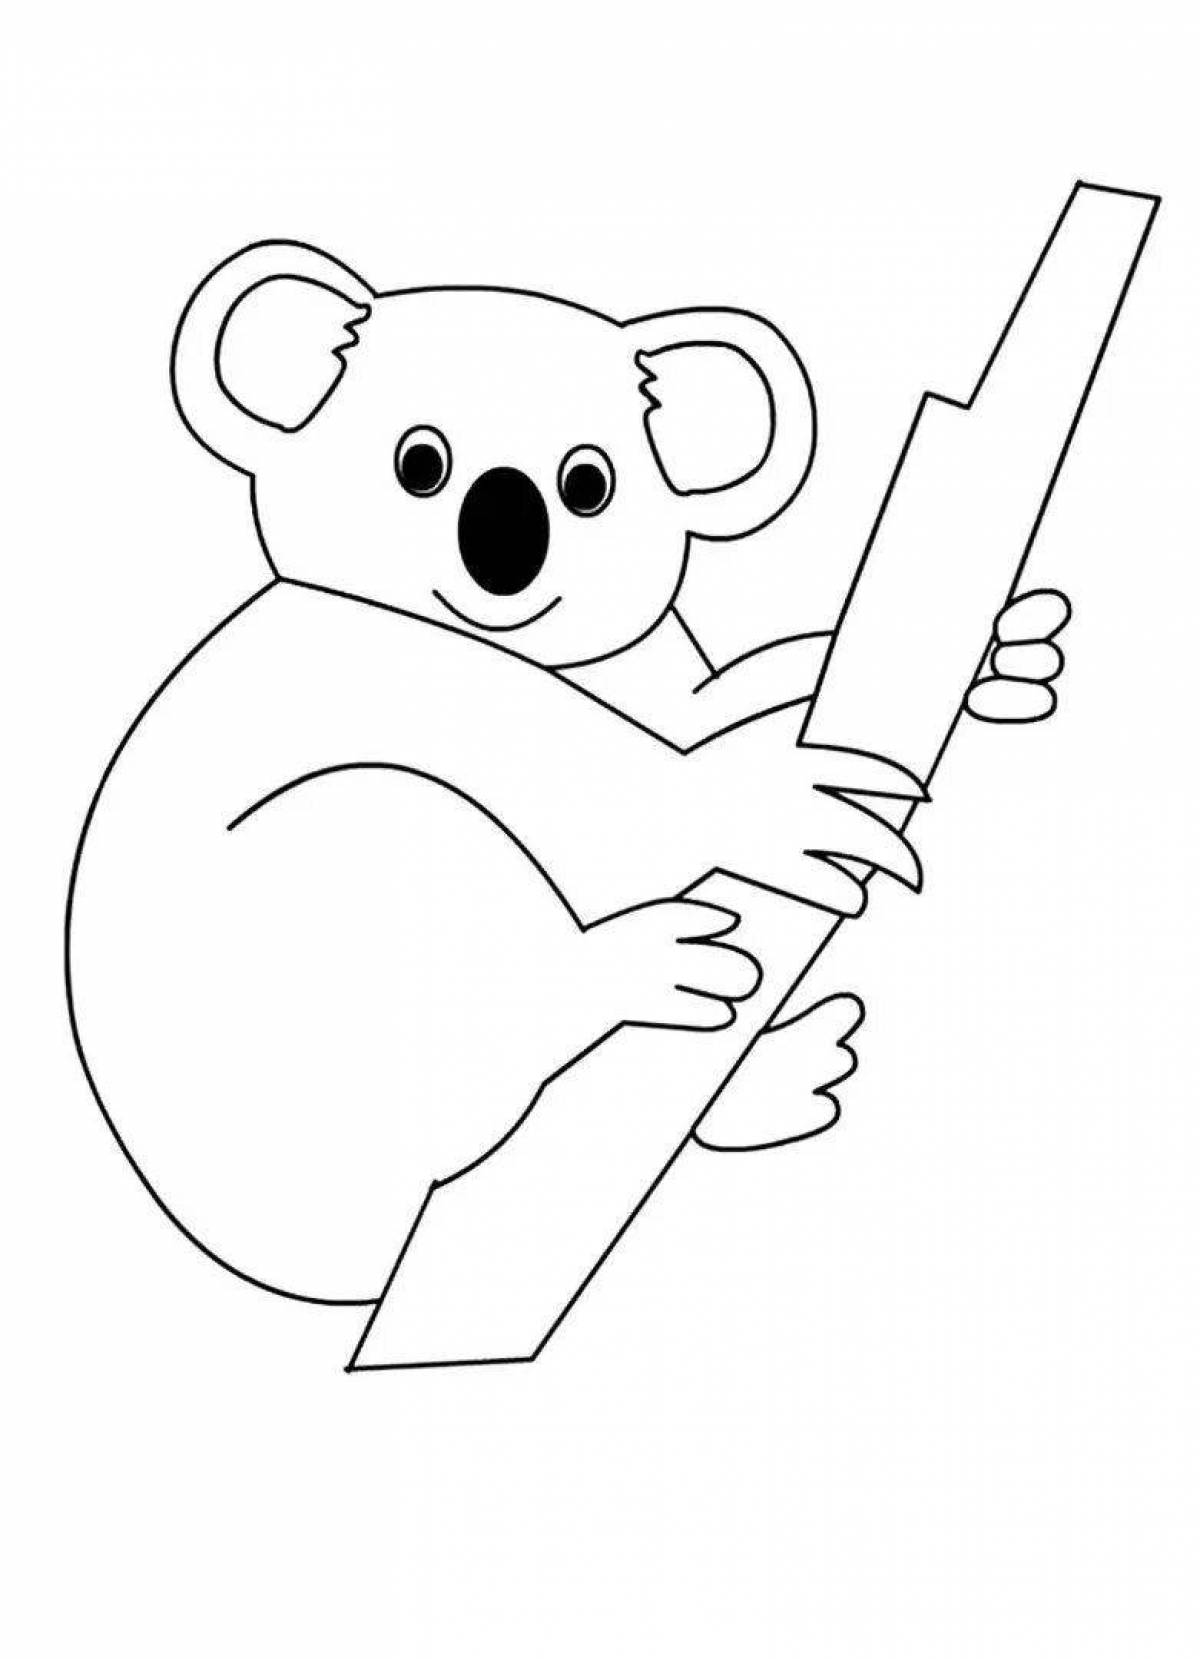 Joyful koala coloring for kids